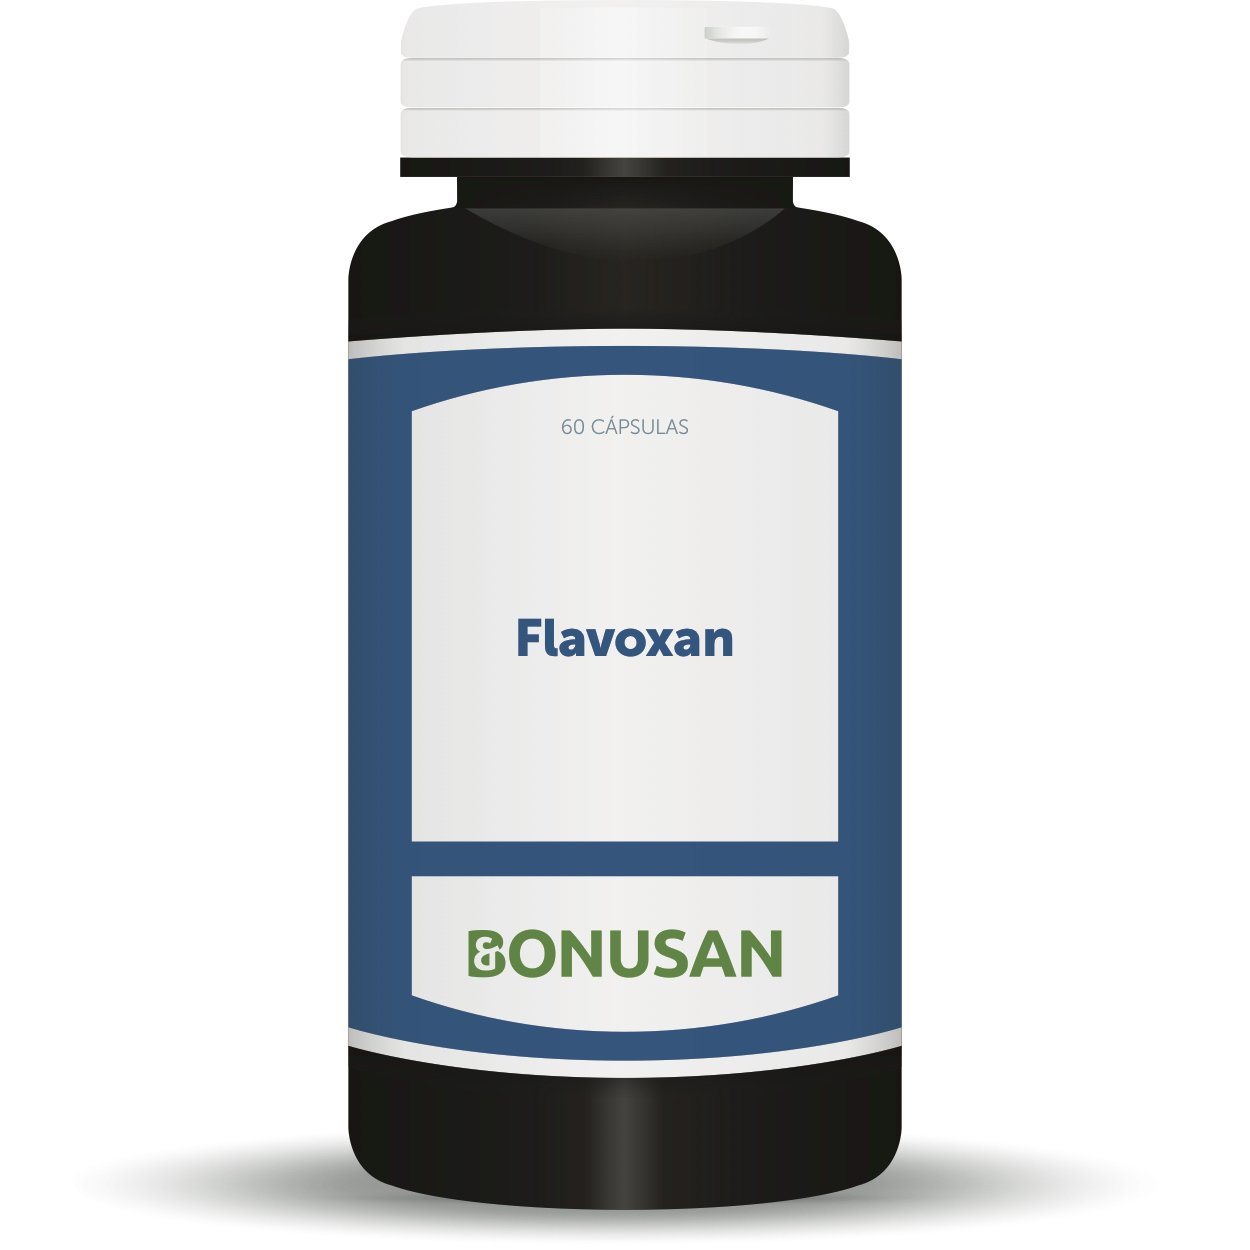 Flavoxan 60 Capsulas | Bonusan - Dietetica Ferrer